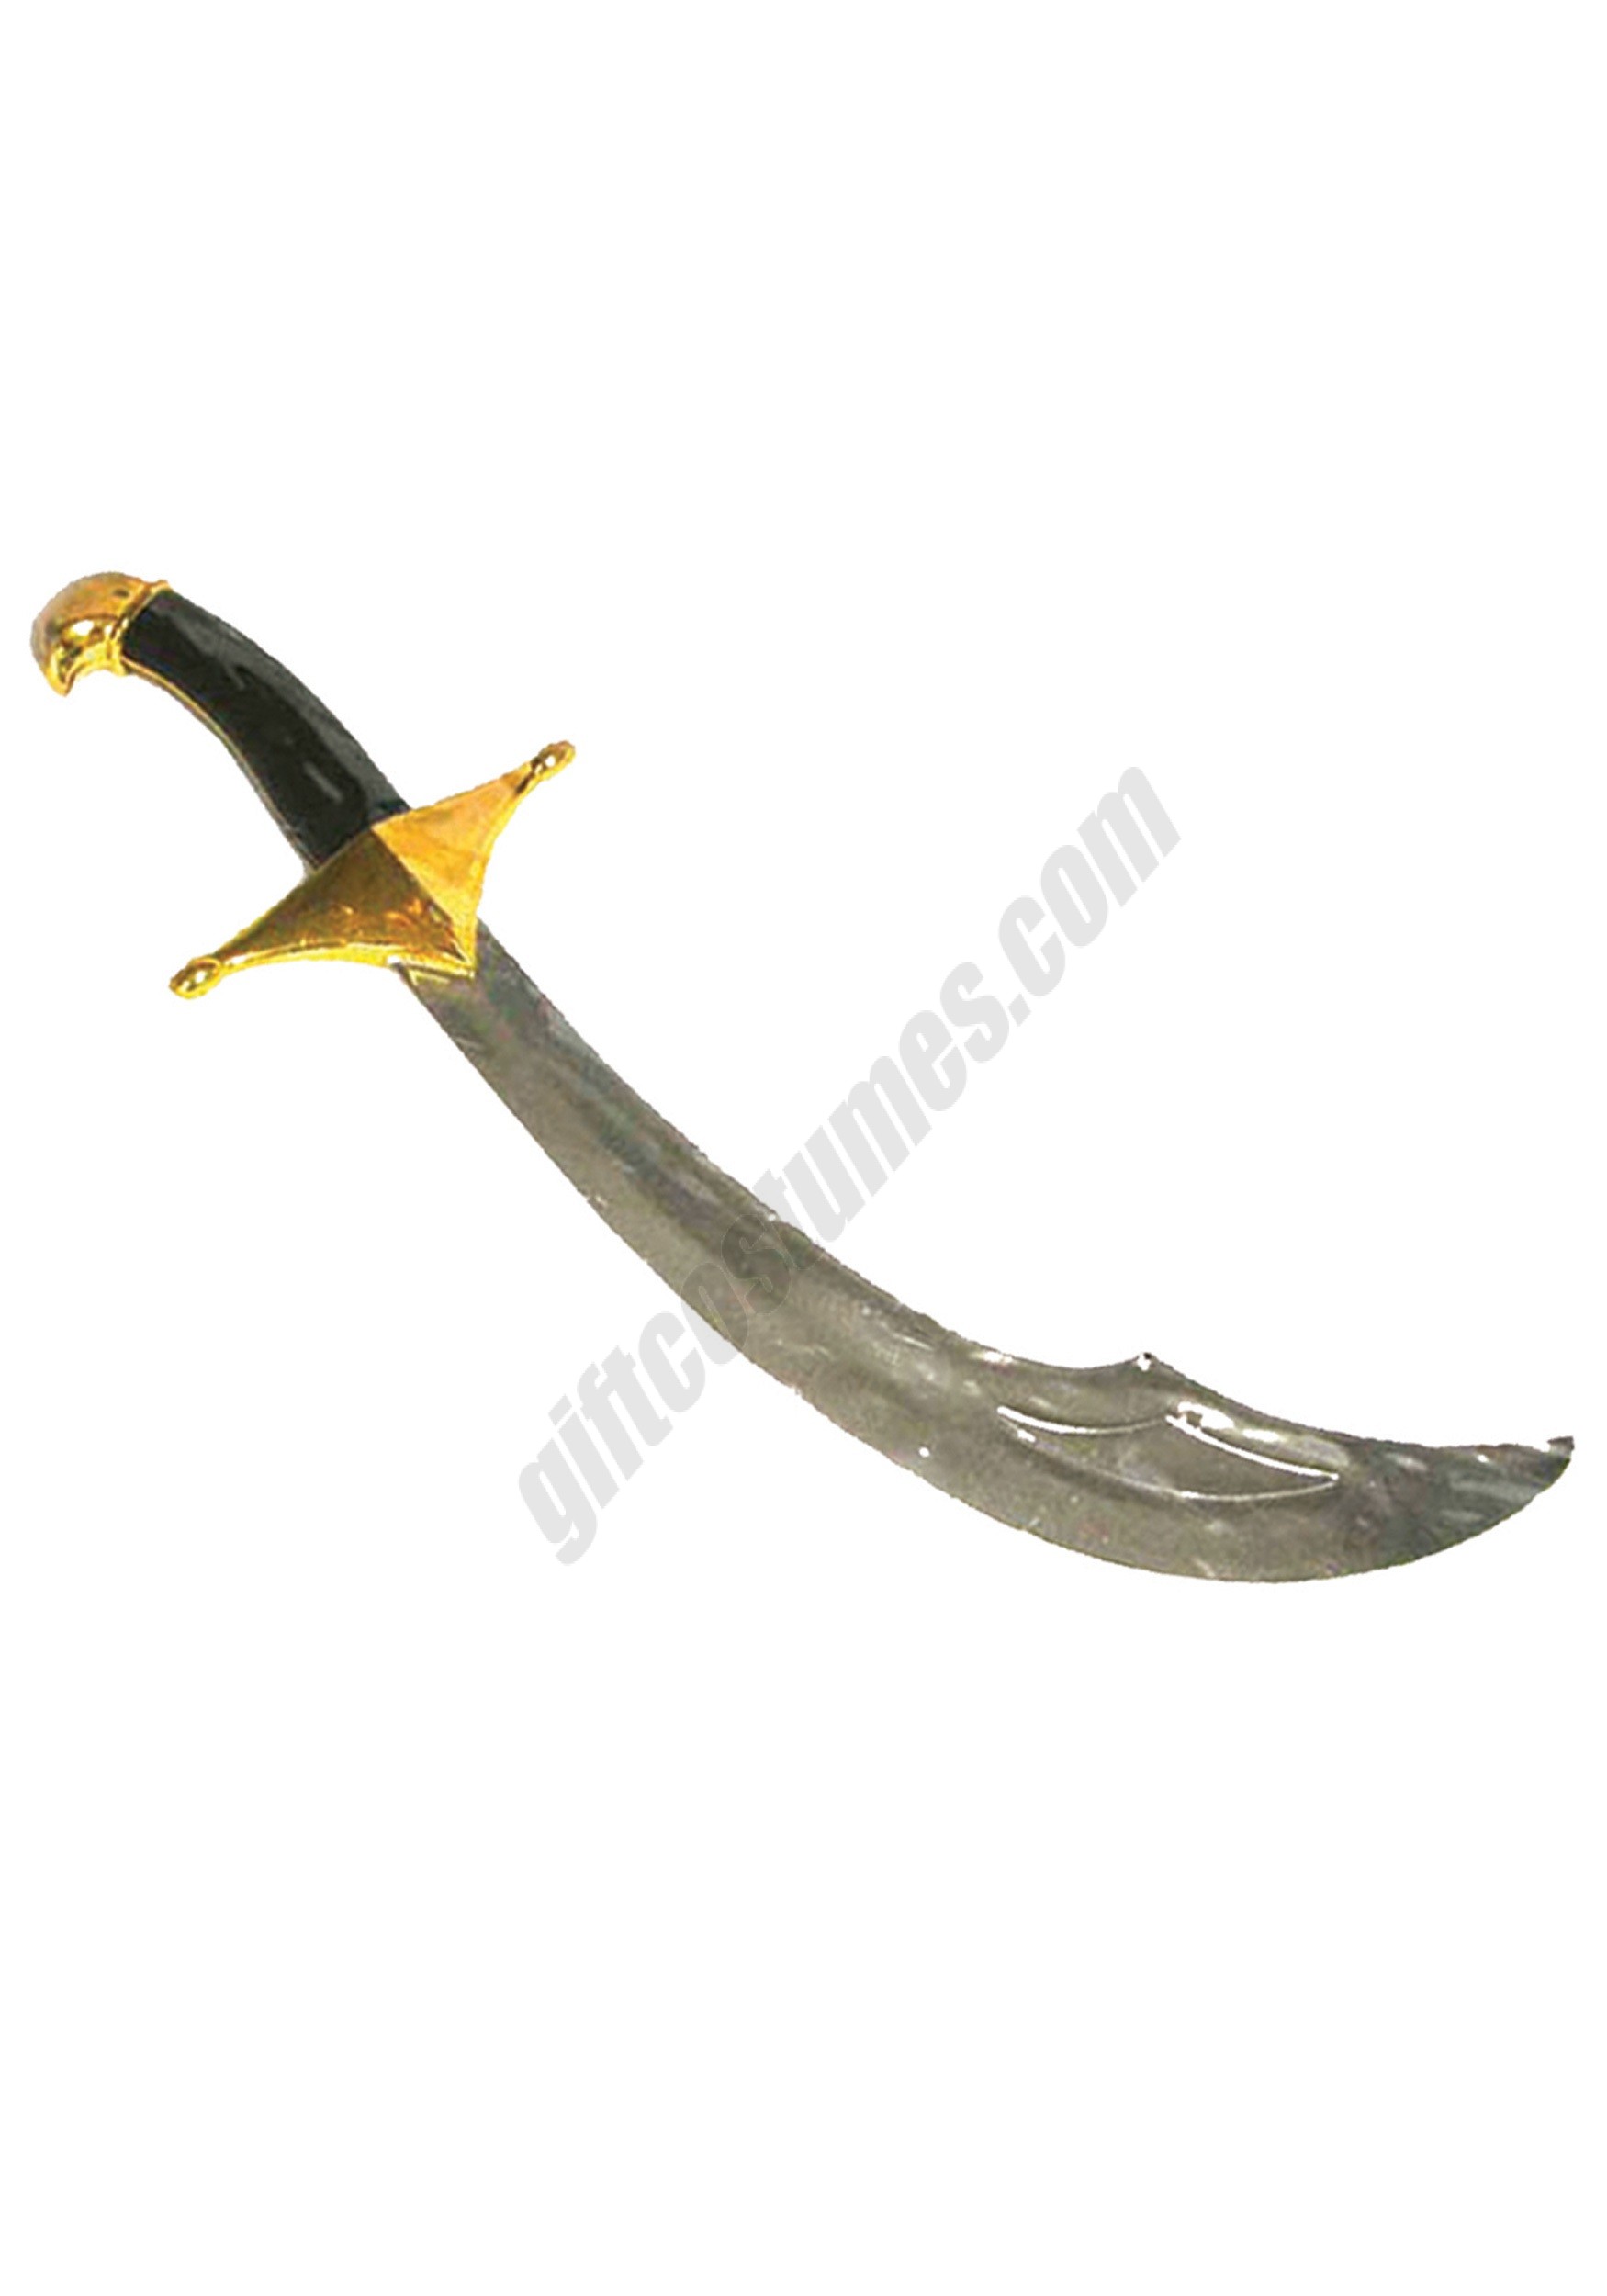 Arabian Cutlass Sword Promotions - Arabian Cutlass Sword Promotions